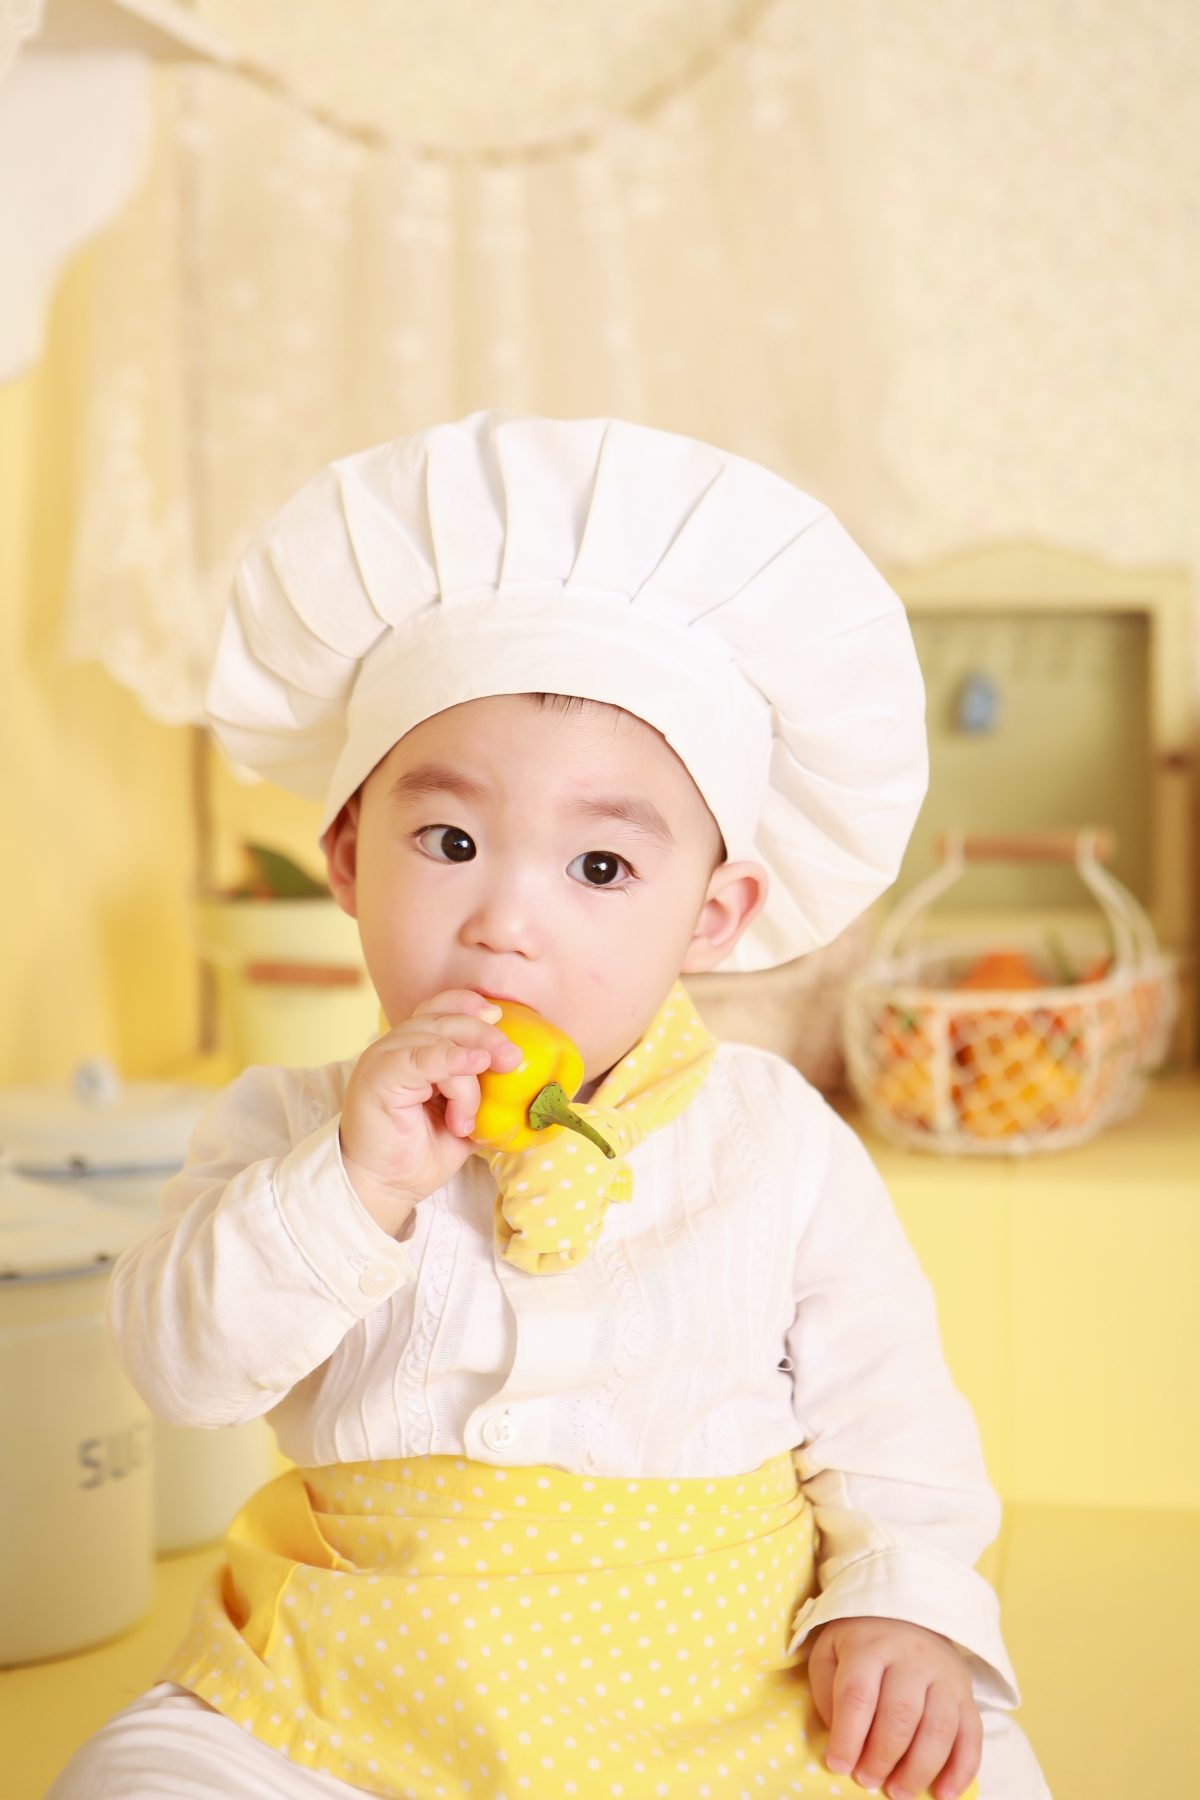 Chef kitchen cooking baby